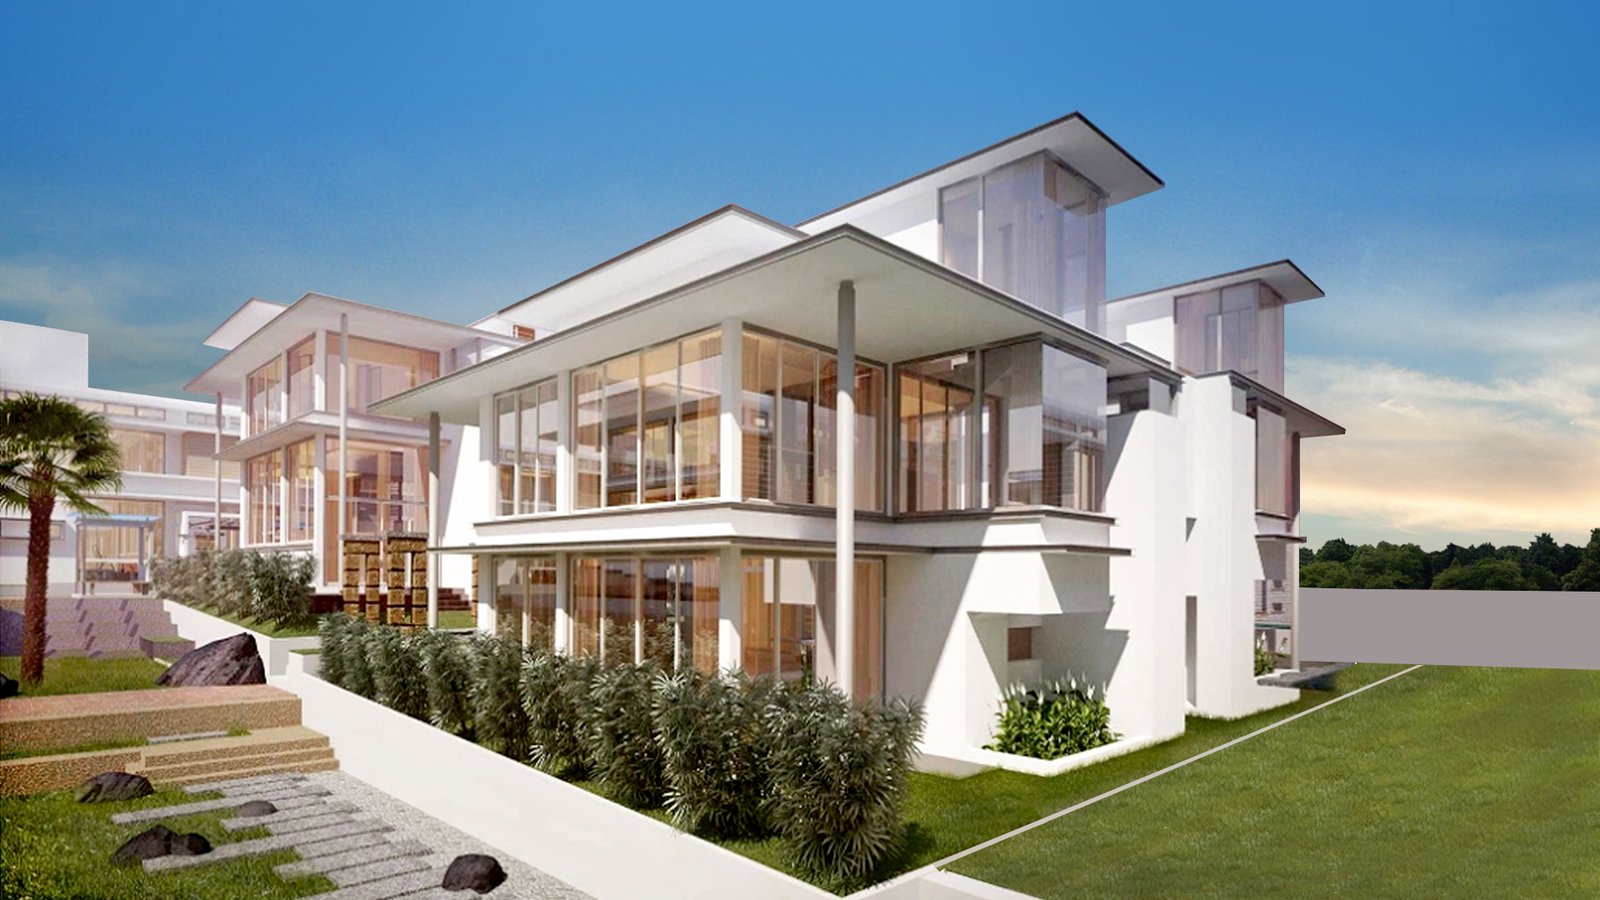 Divyasree Cest La Vie offers you luxurious 5-star-like serviced villa